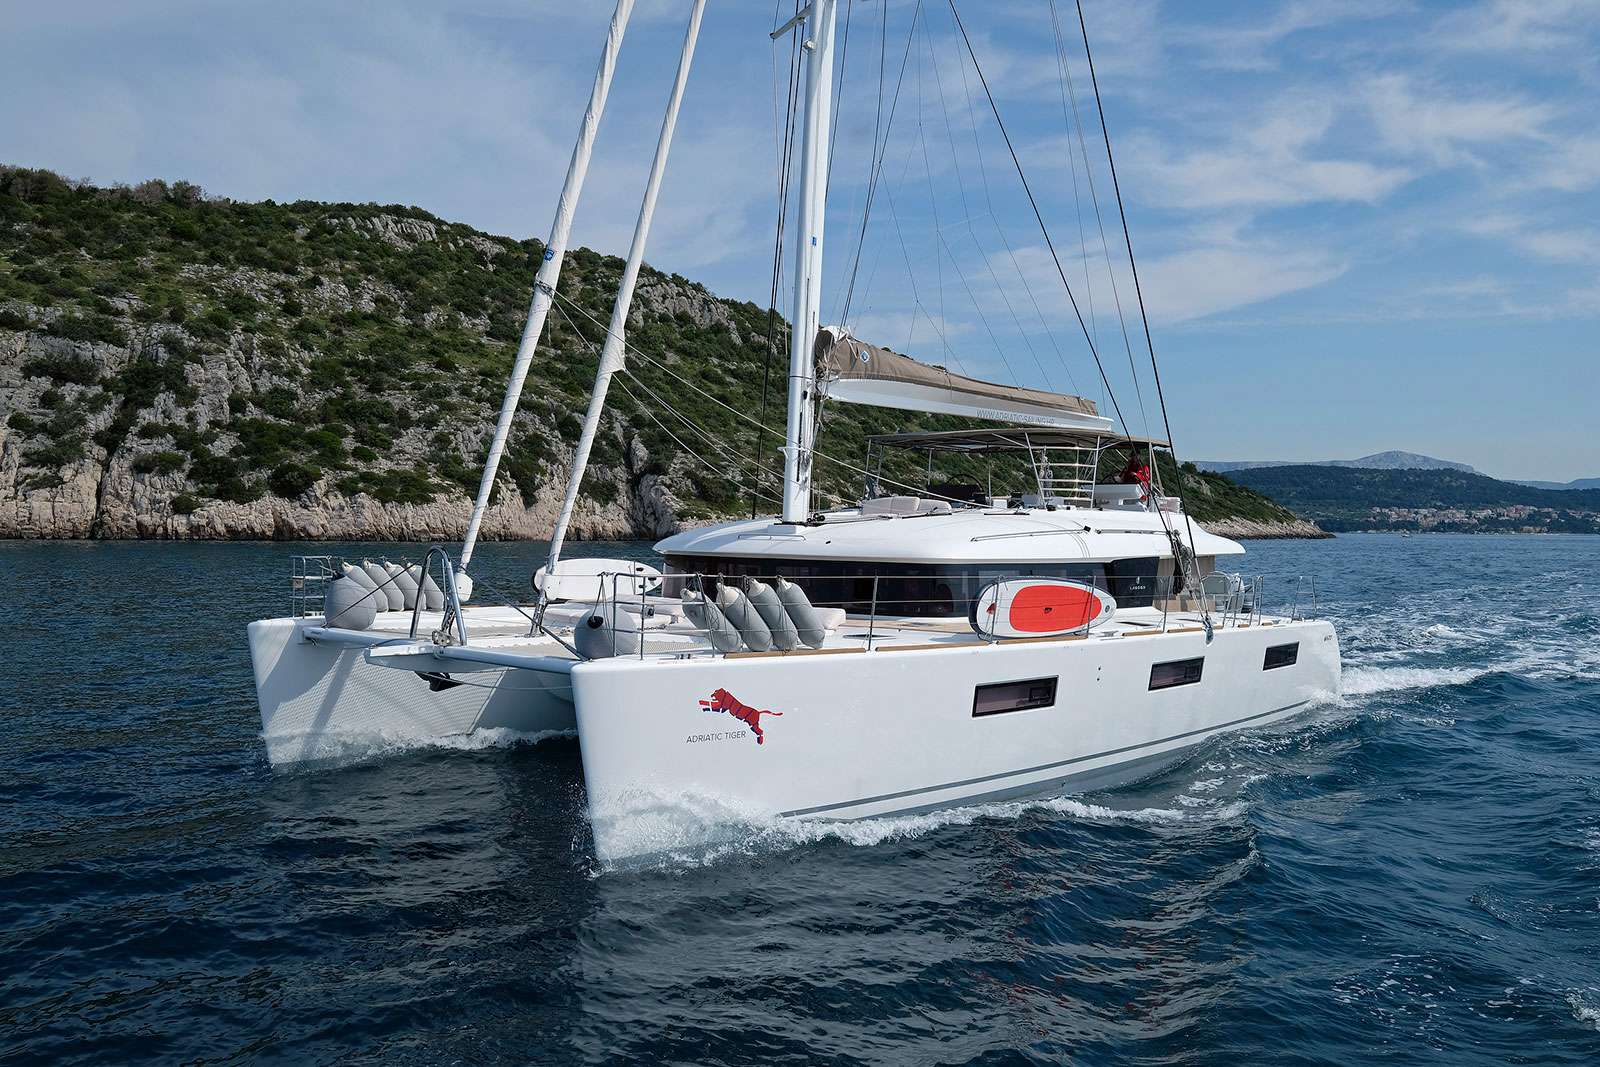 Adriatic Tiger crewed Lagoon 620 catamaran charter underway in Croatia